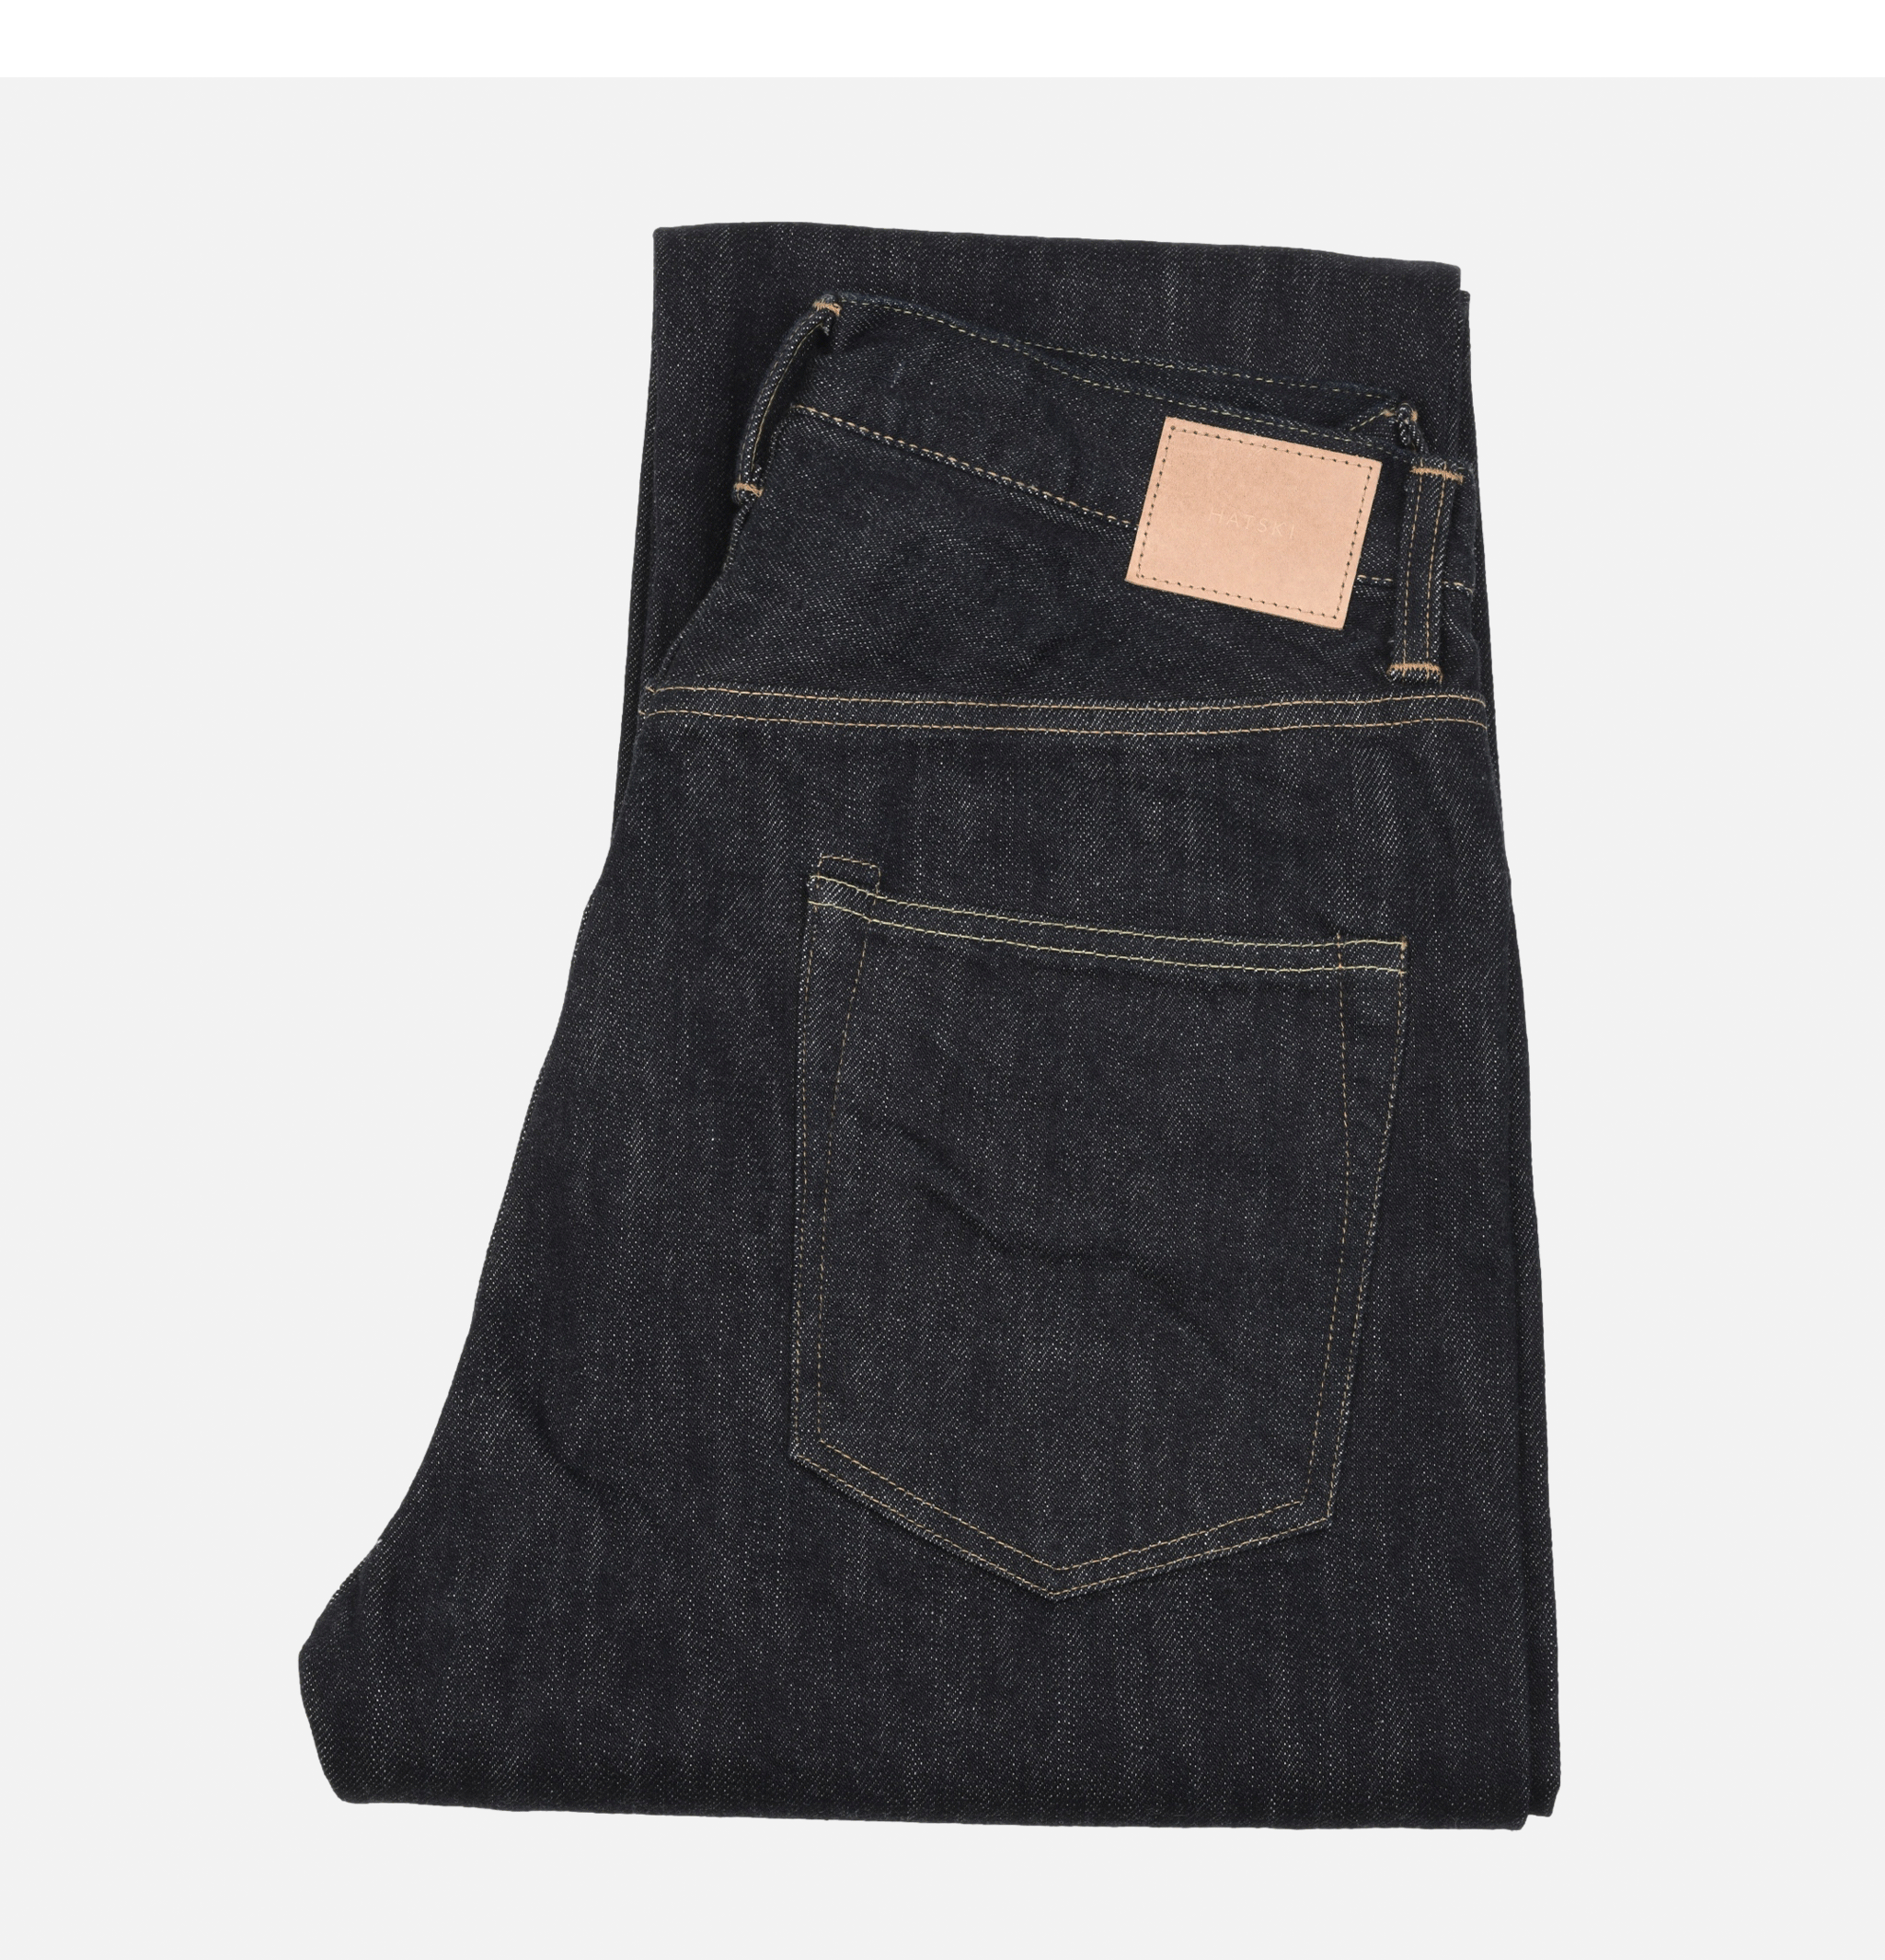 HATSKI Jeans 22004 Onewash Blue